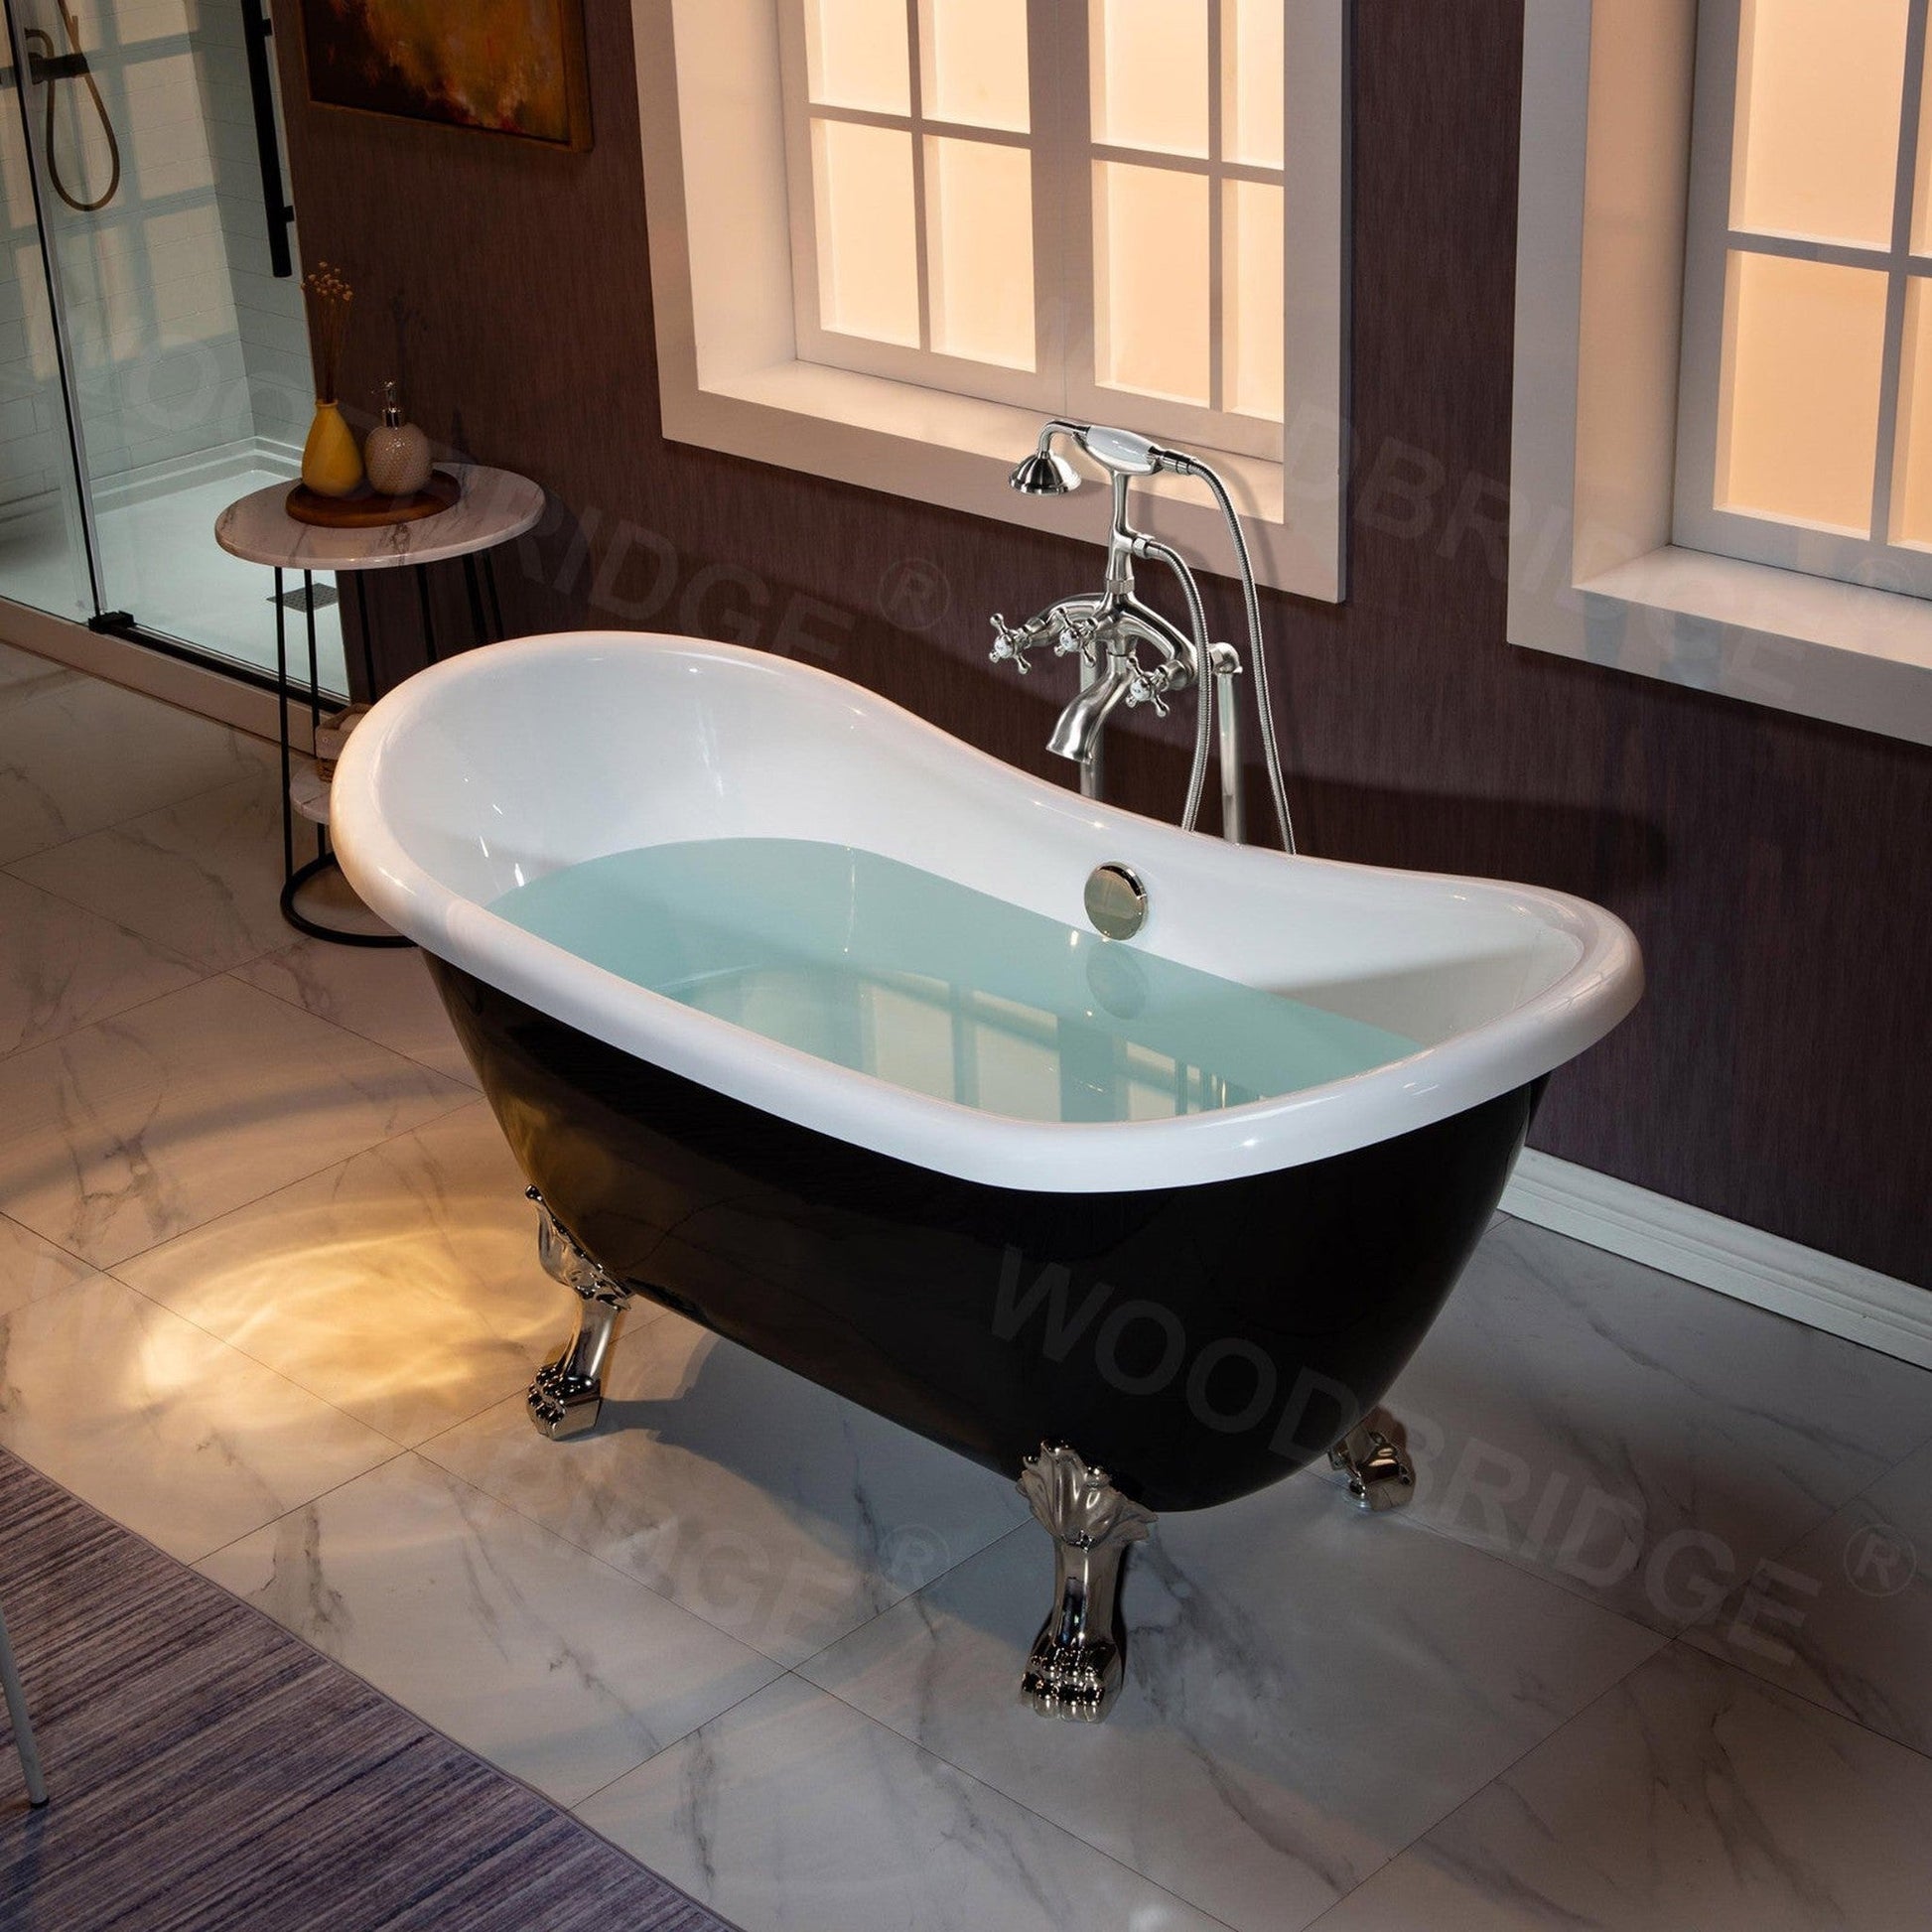 WoodBridge 59" Black Acrylic Double Slipper Clawfoot Bath Tub With Brushed Nickel Feet, Drain, Overflow, F0070BNVT Tub Filler and Caddy Tray